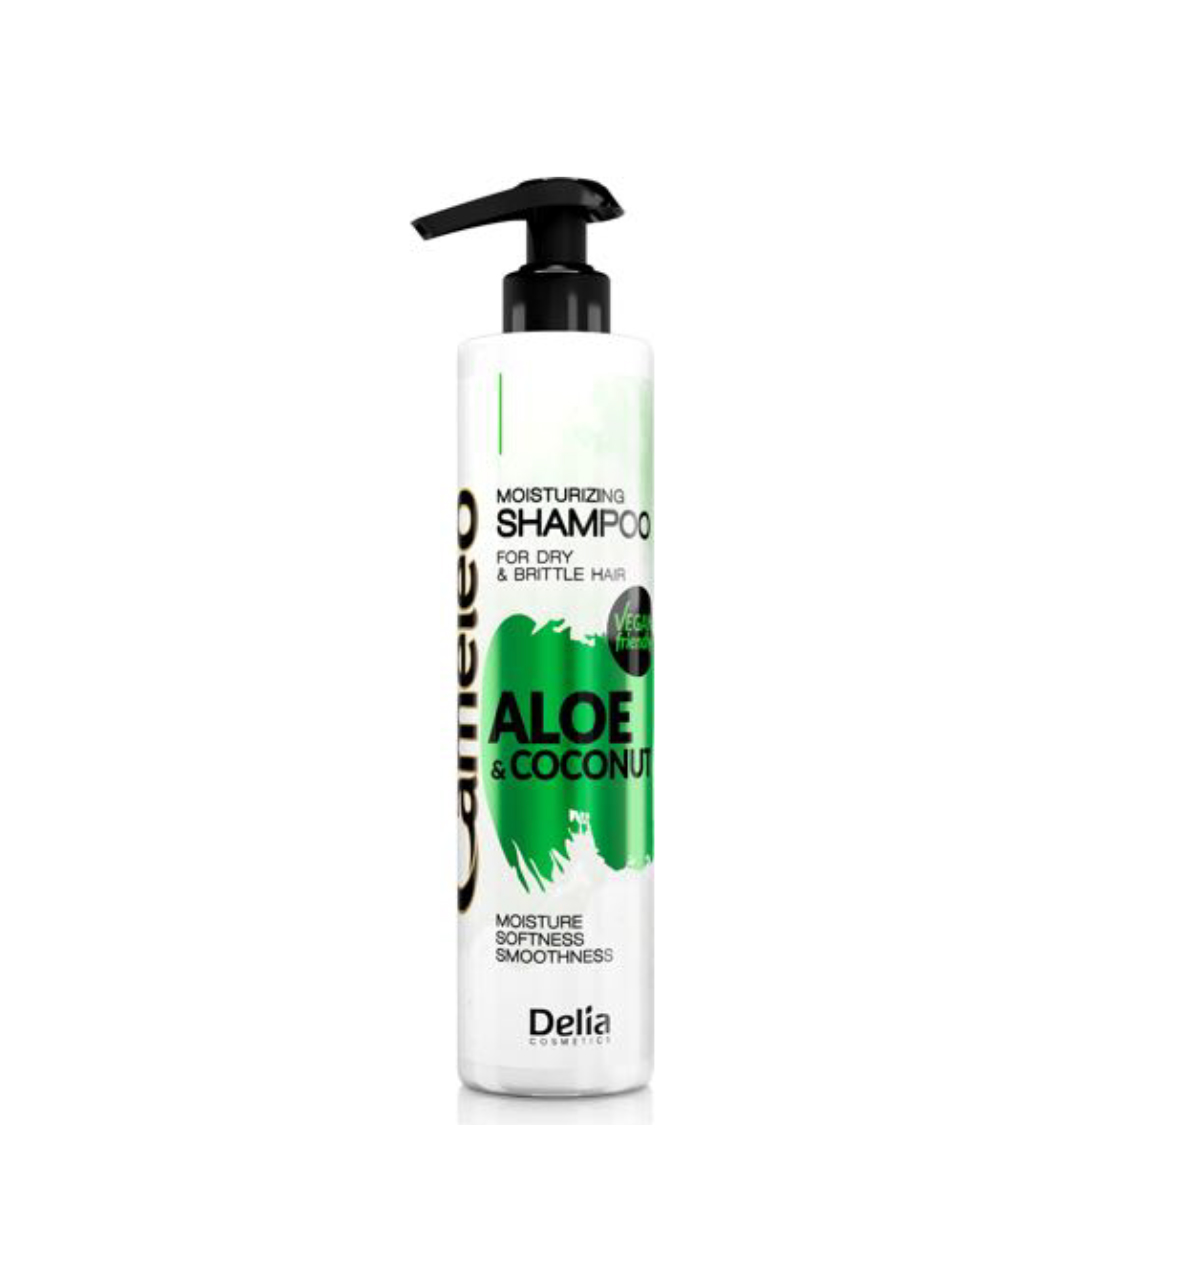 Delia Cameleo Aloe & Coconut Moisturizing Shampoo